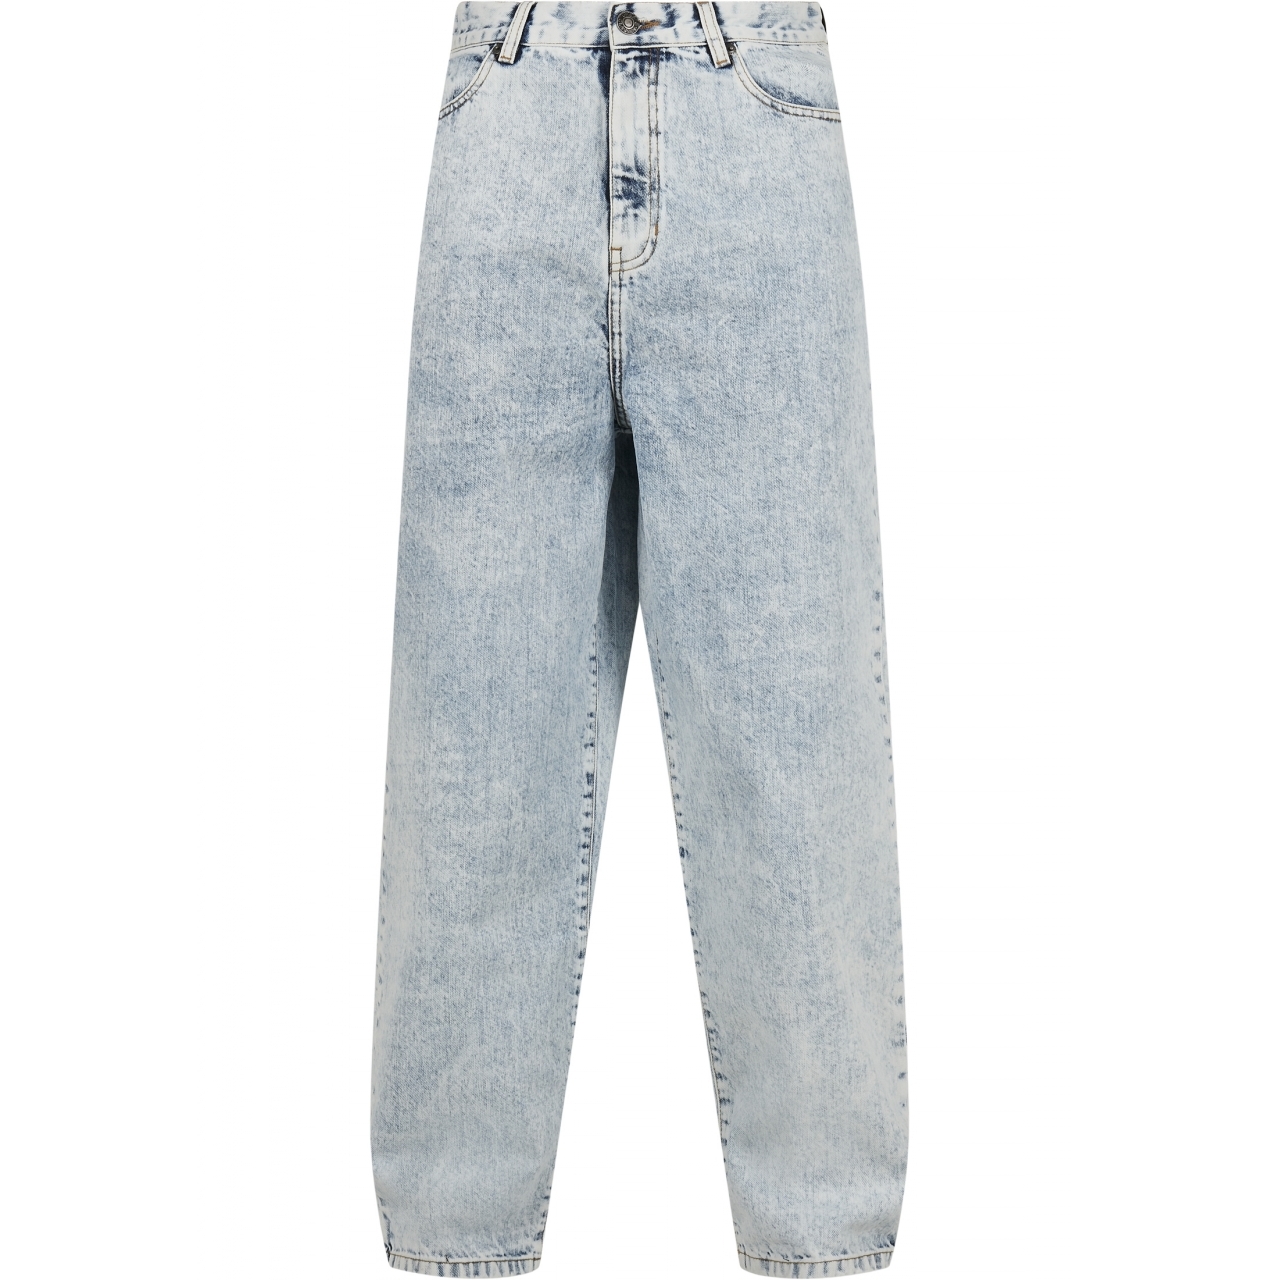 Džíny Urban Classics 90s Jeans - modré, 34